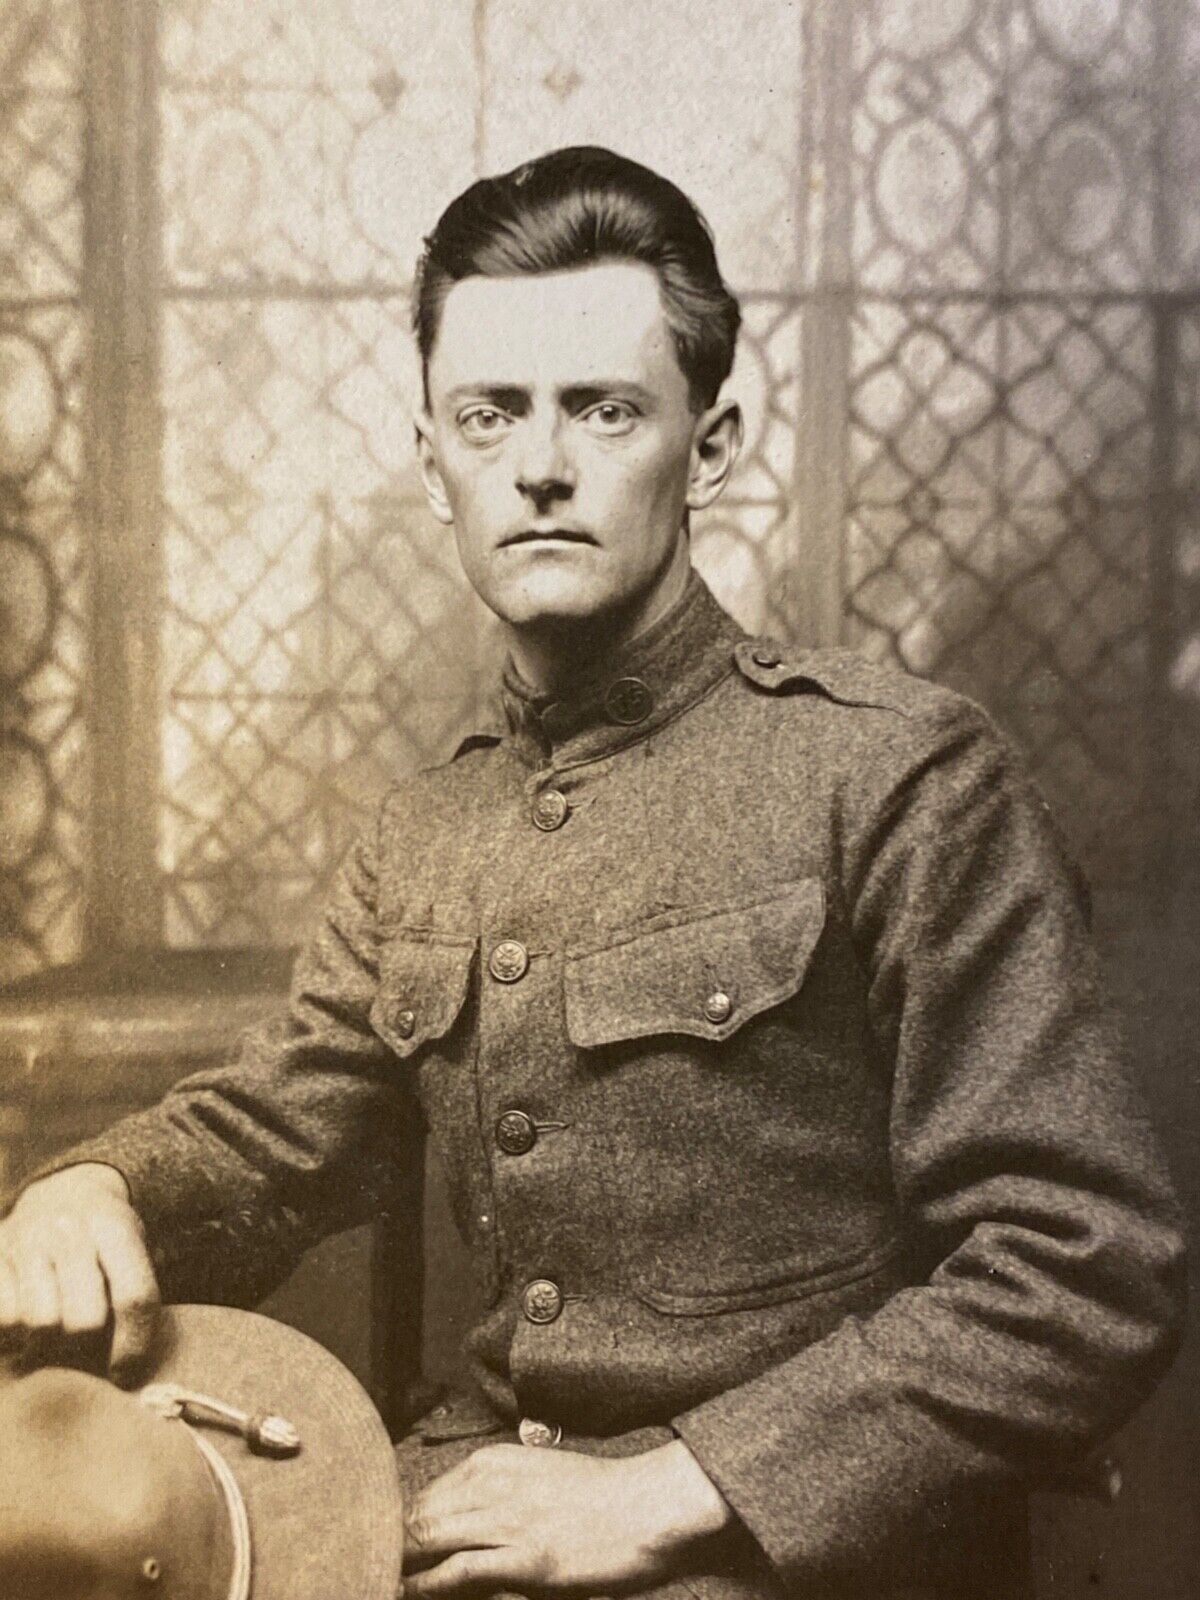 1918 WWI RPPC: U.S. SOLDIER IN UNIFORM antique real photo postcard VERSION NO. 2